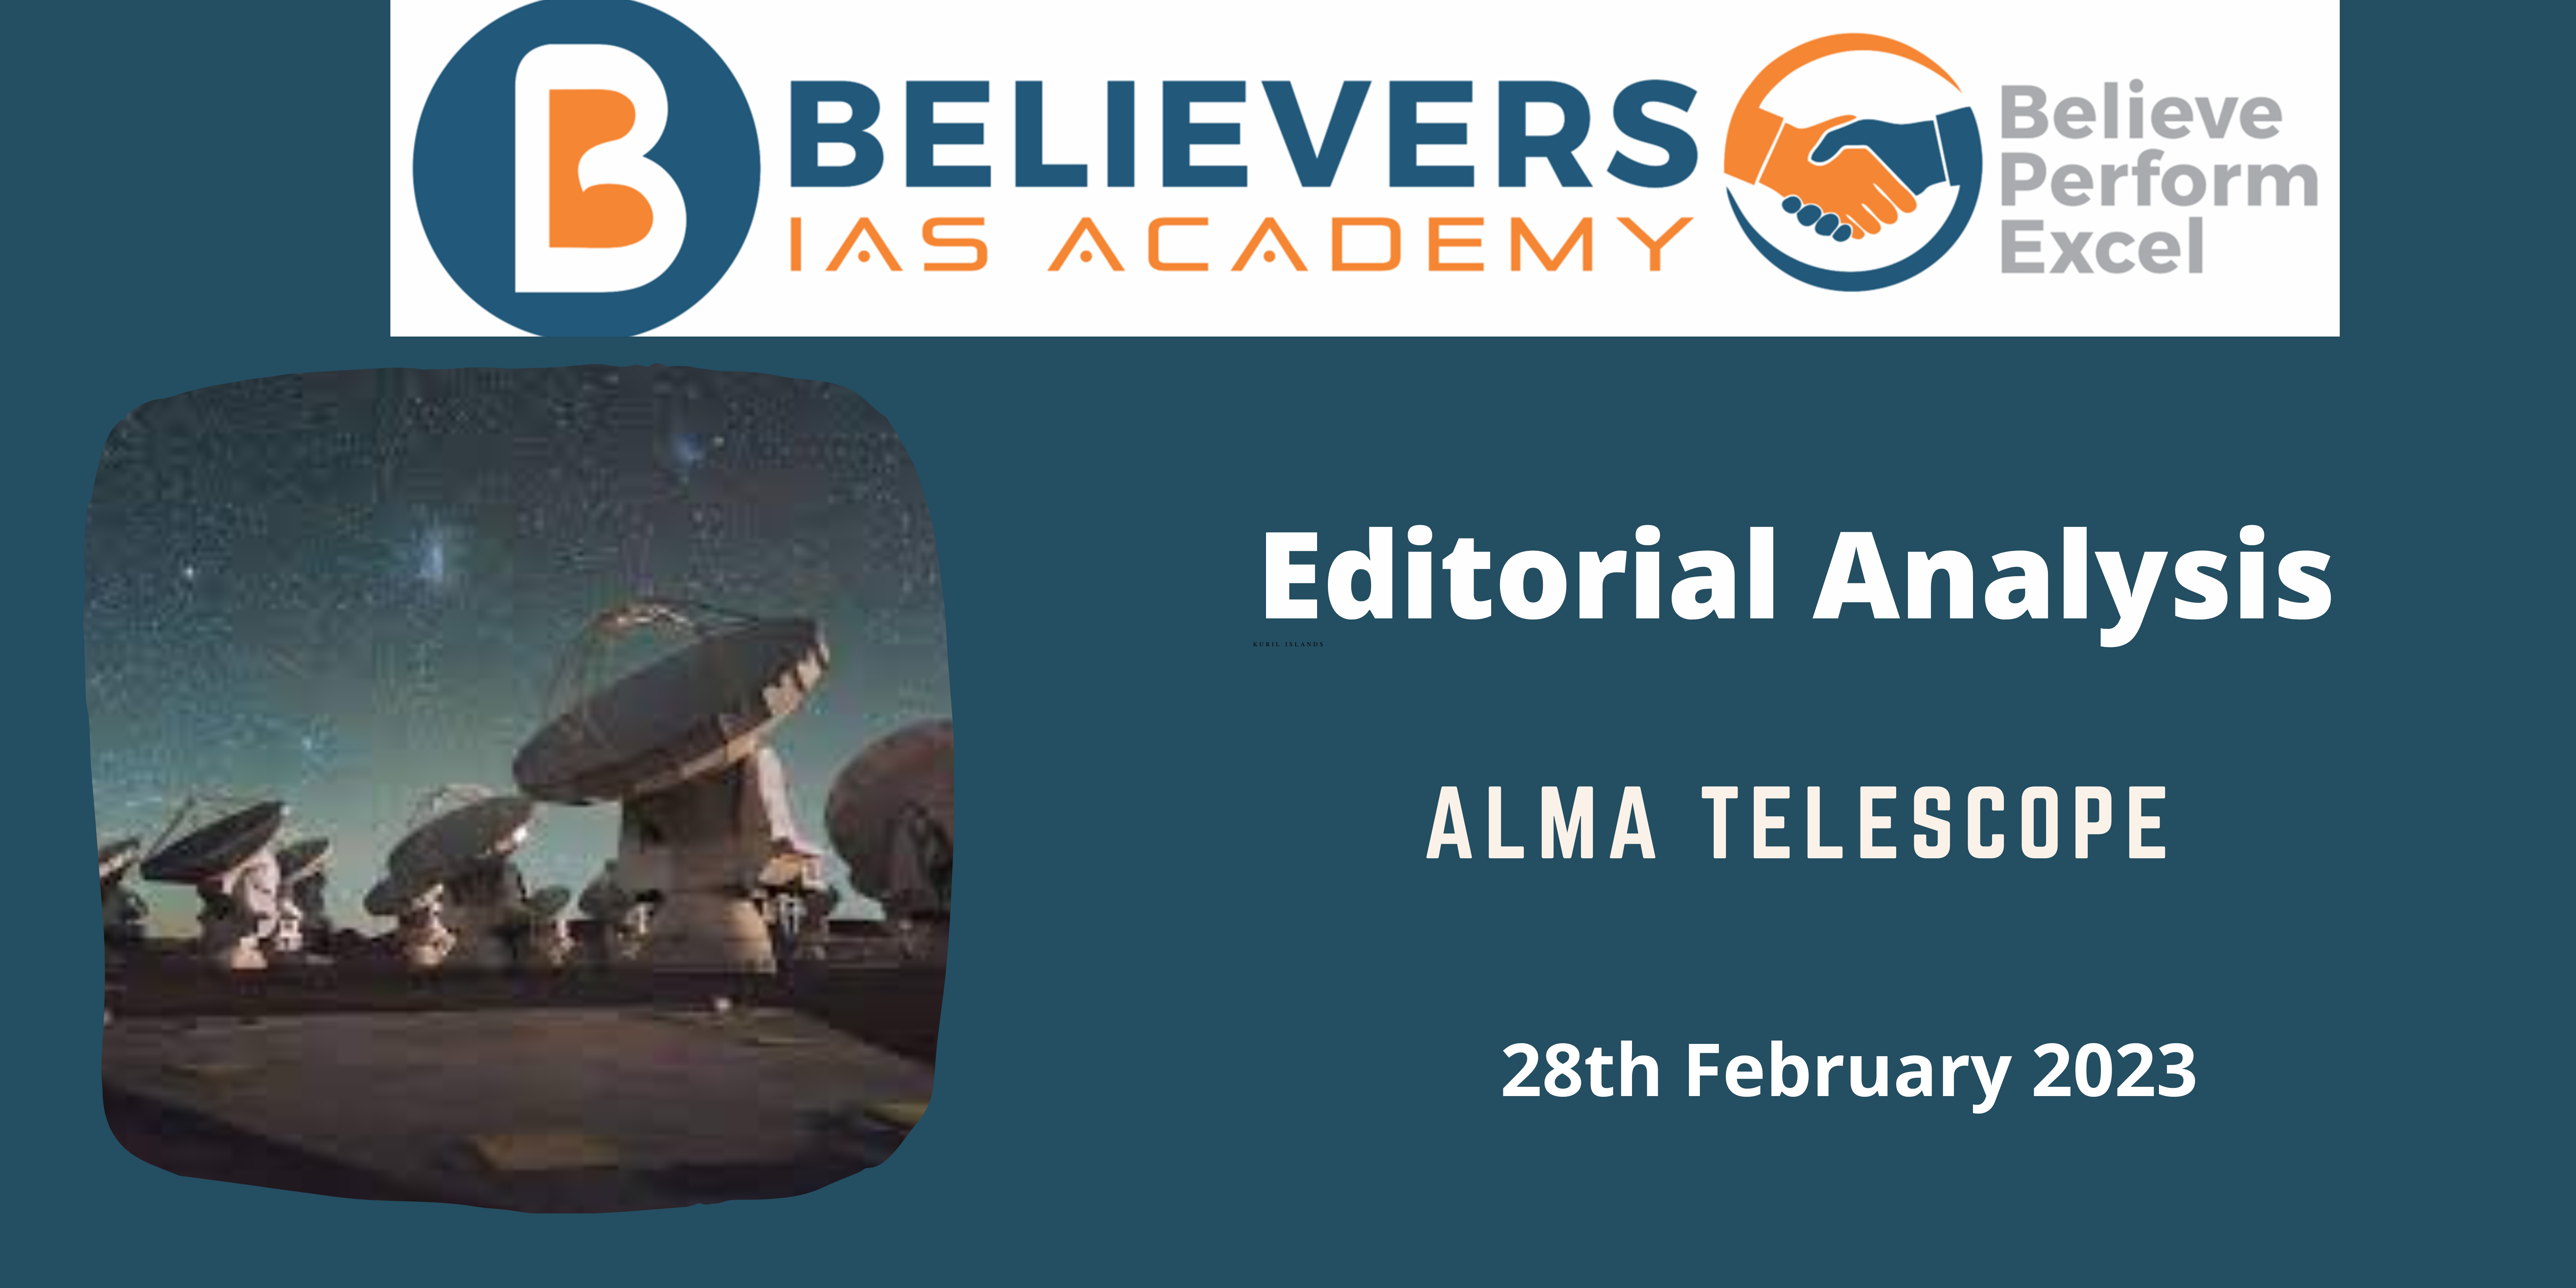 ALMA TELESCOPE: A Complete Overview